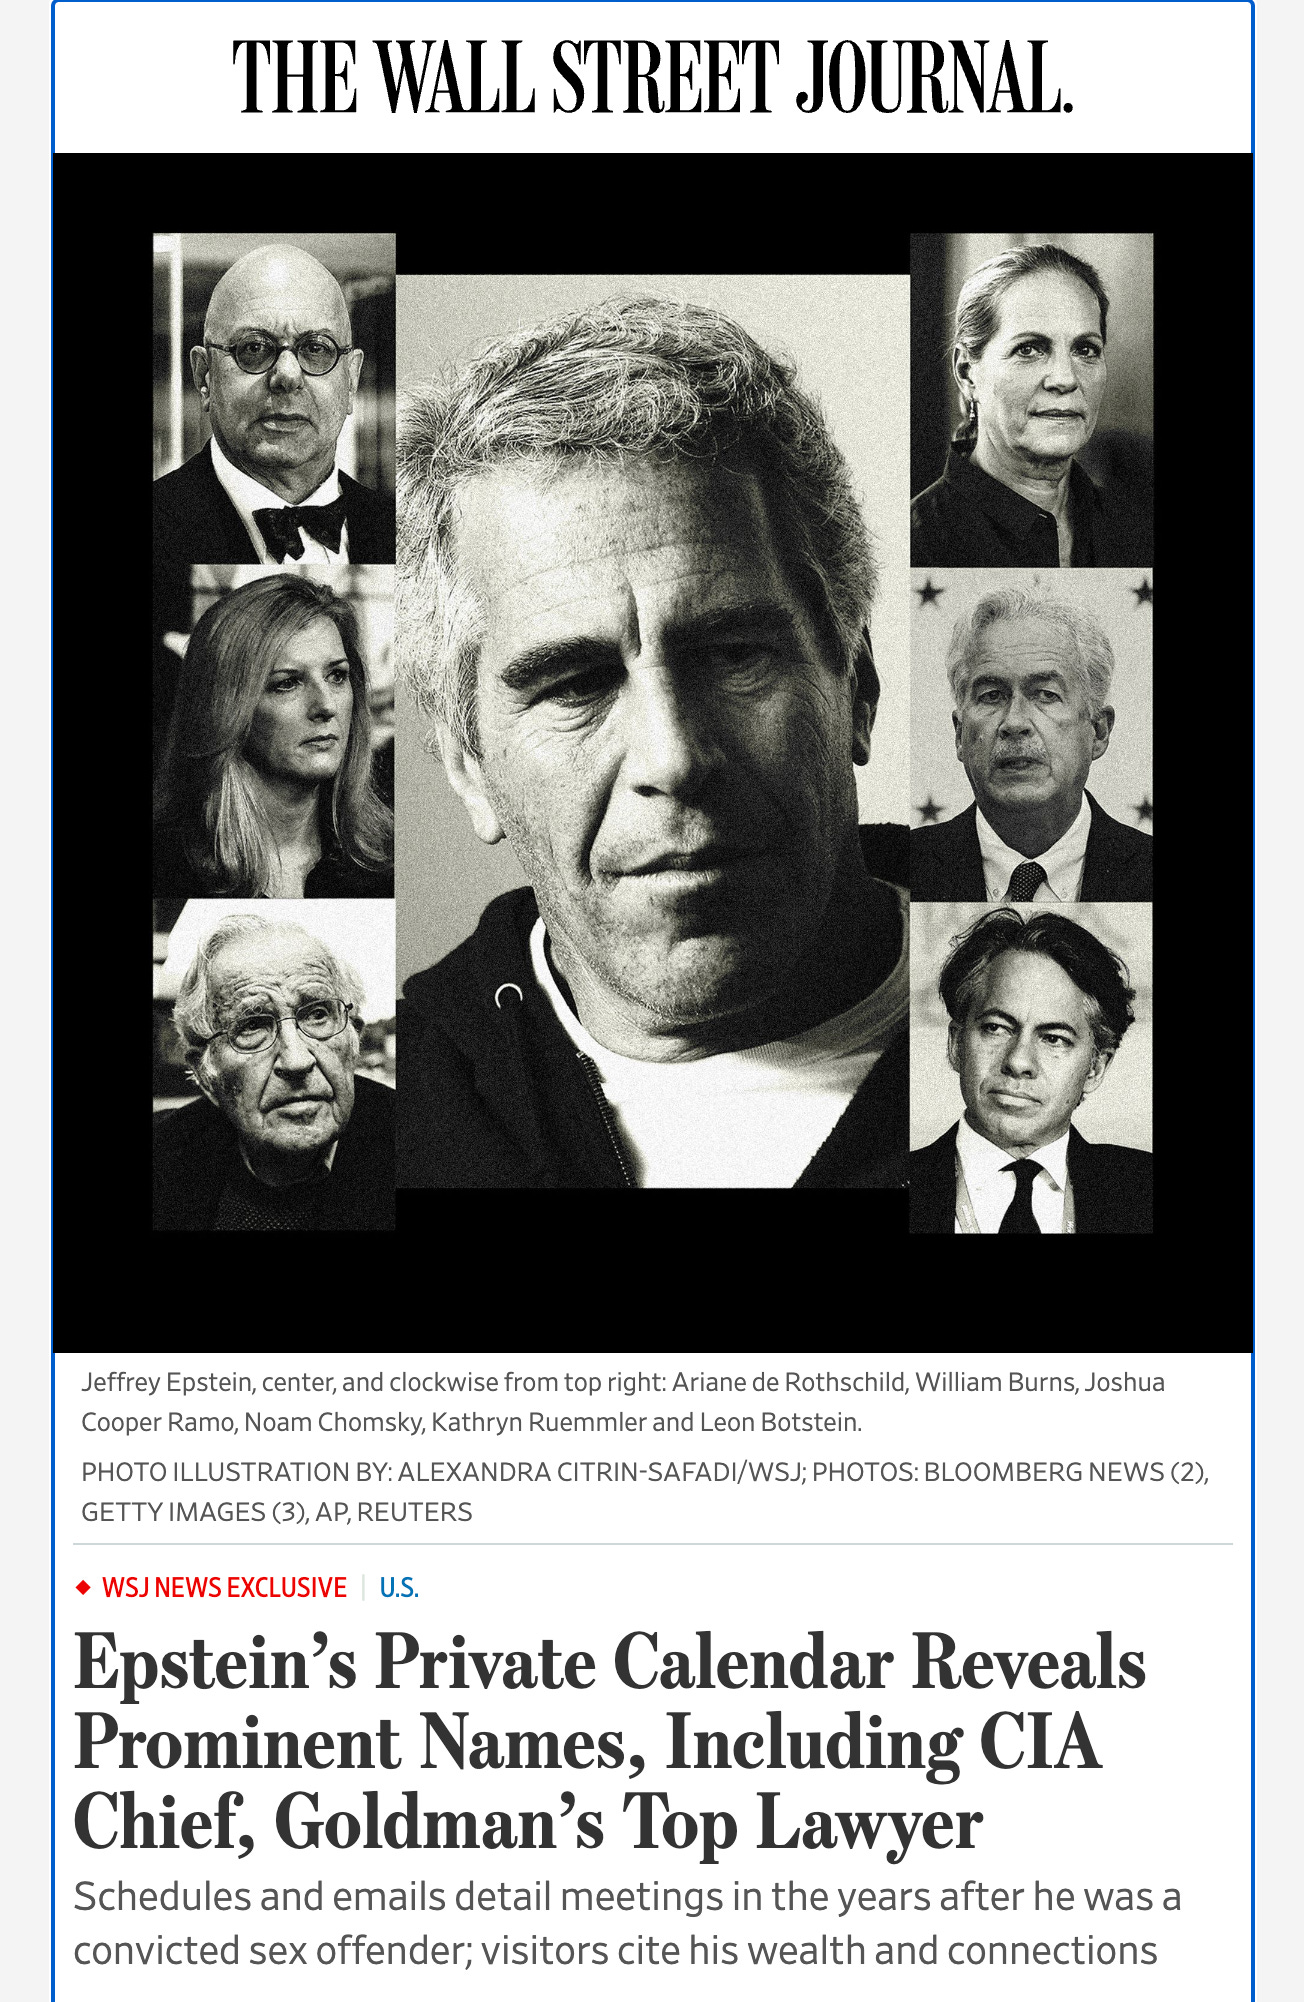 The Latest Details on the Epstein/Maxwell Saga – Jordan Sather